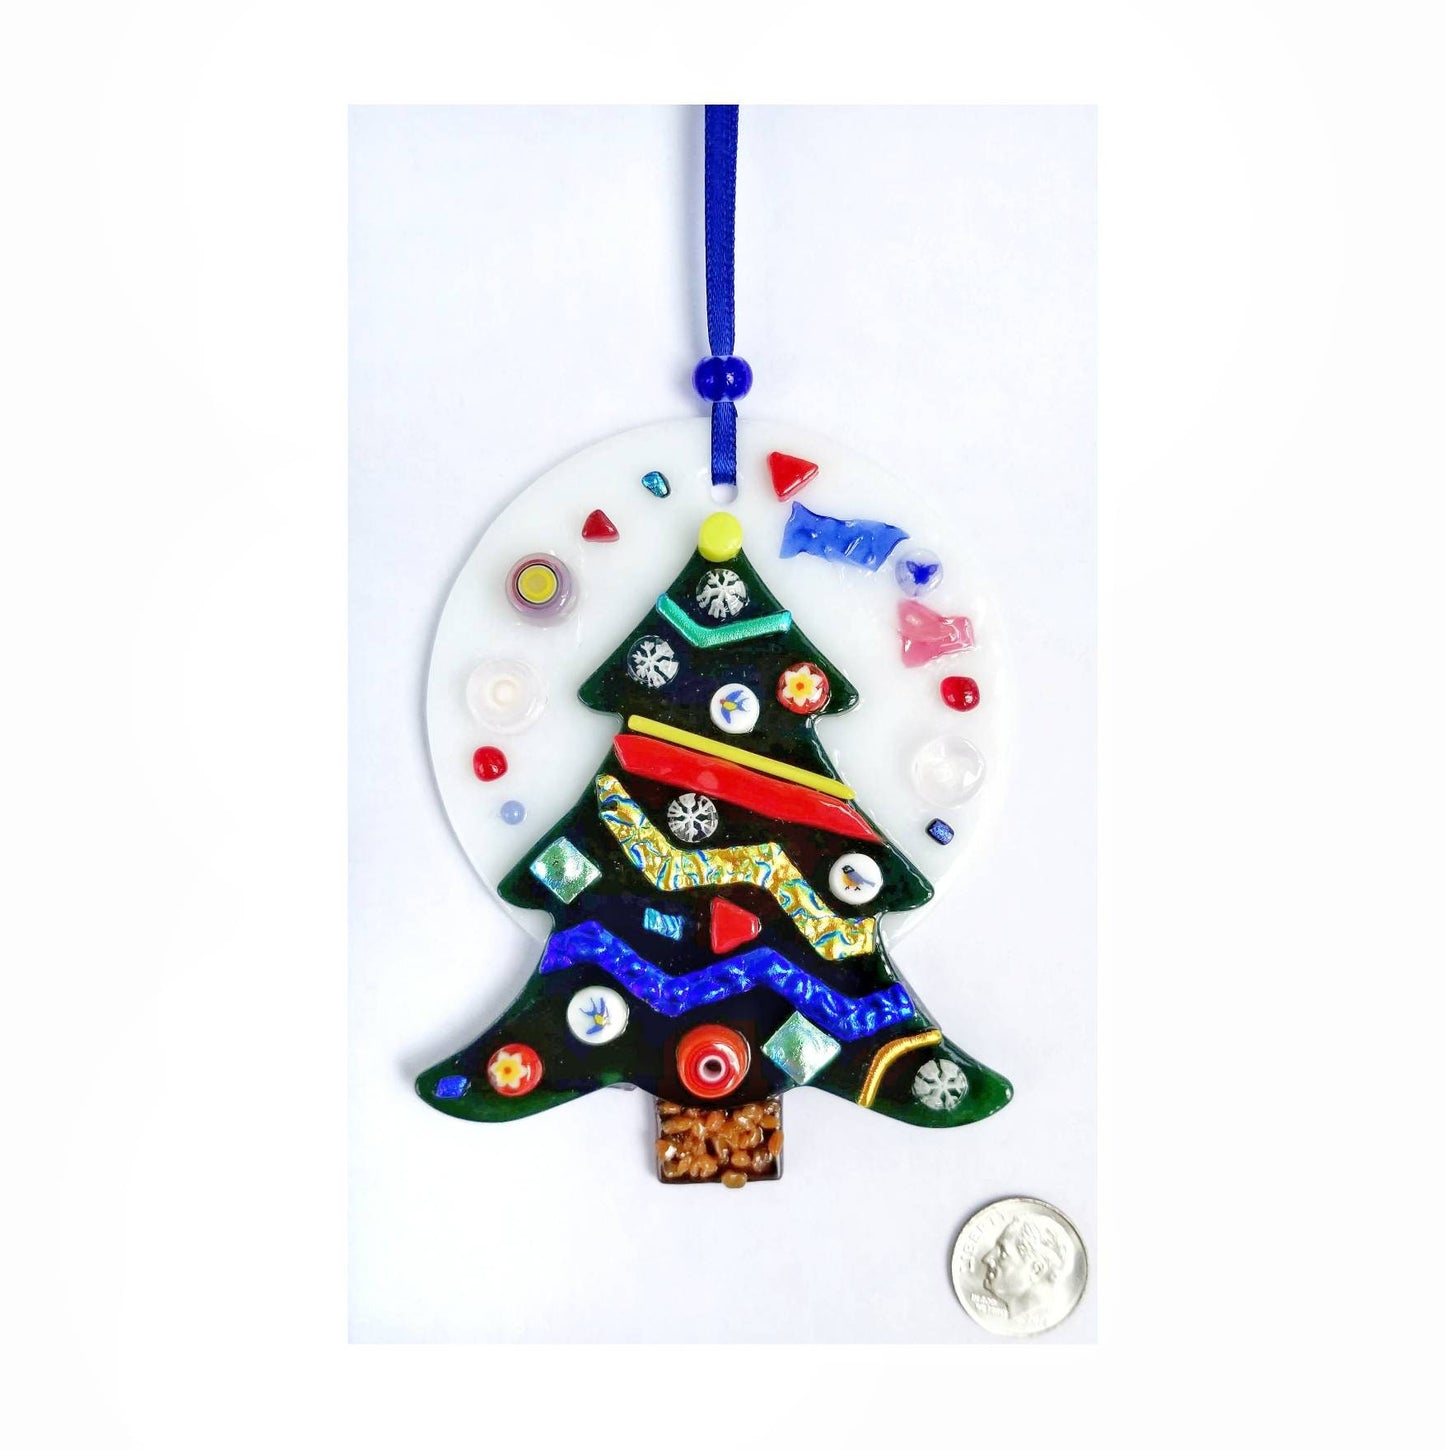 Fused Glass Tree suncatcher. Red, white, blue, dark green. Dichroic wavy glass. Evergreen Spruce tree ornament.